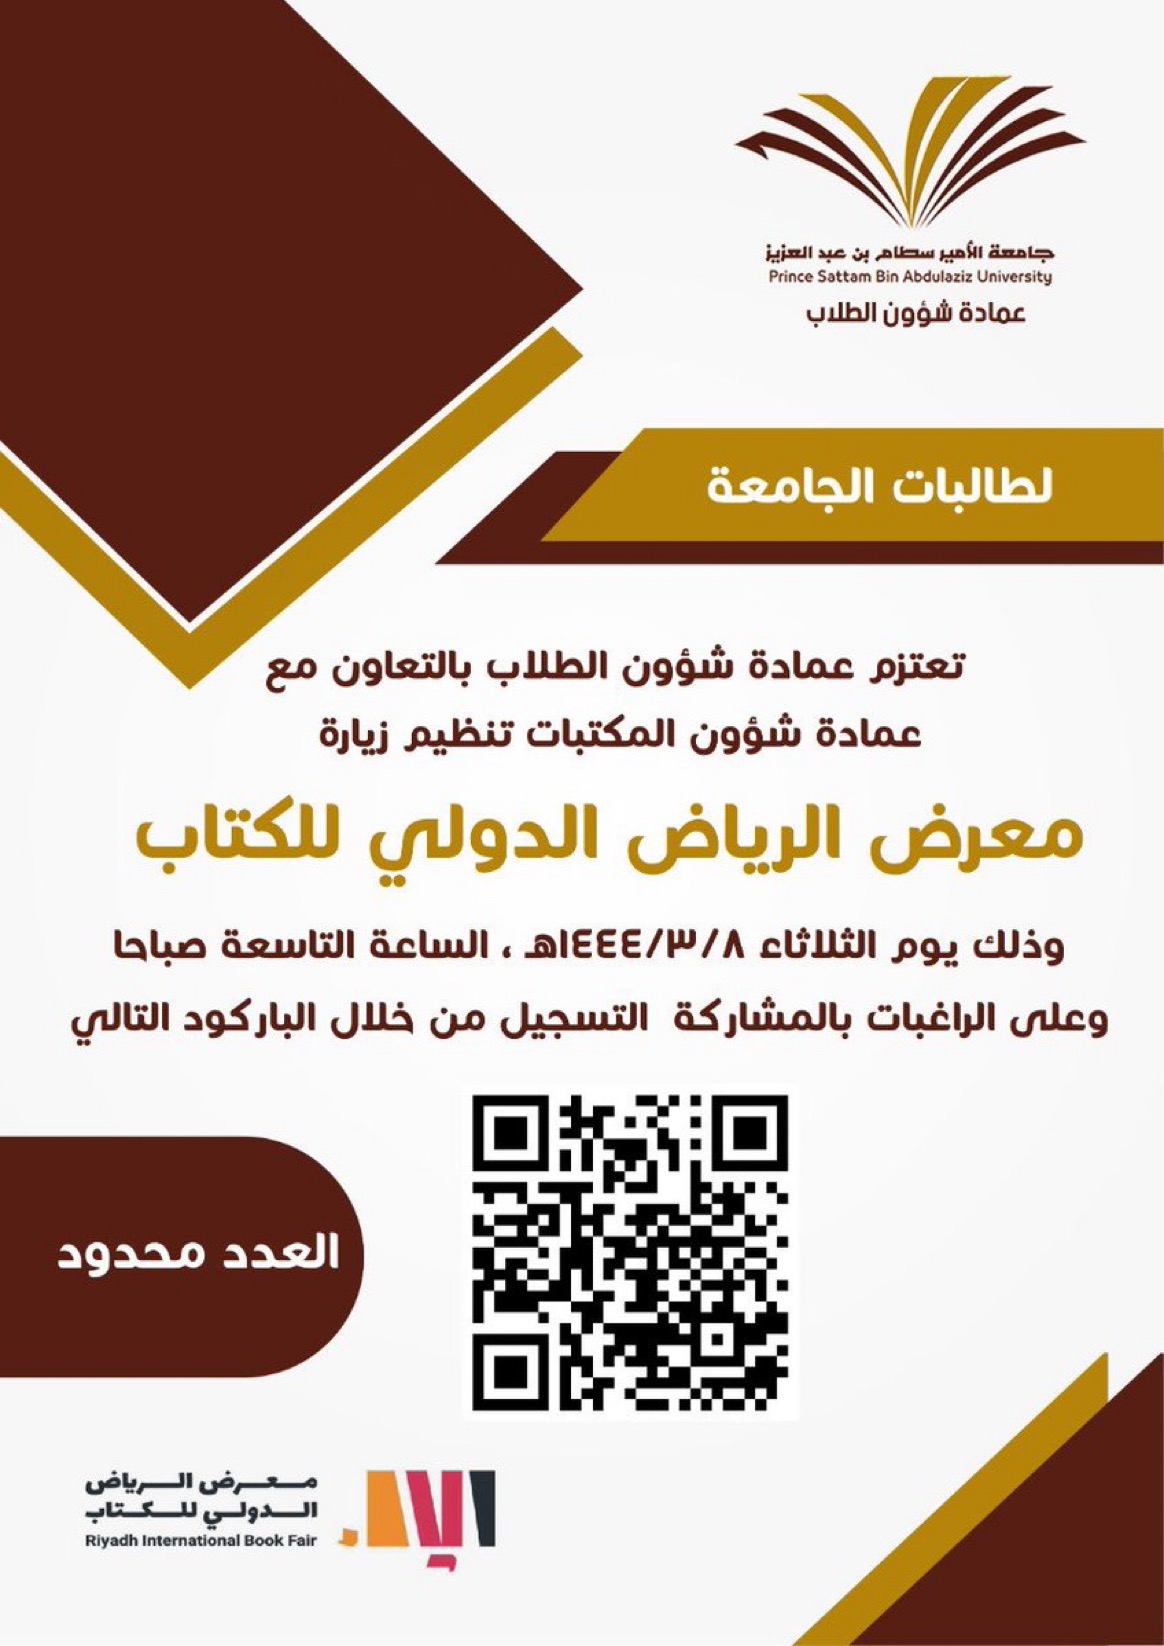 Visit Riyadh International Book Fair